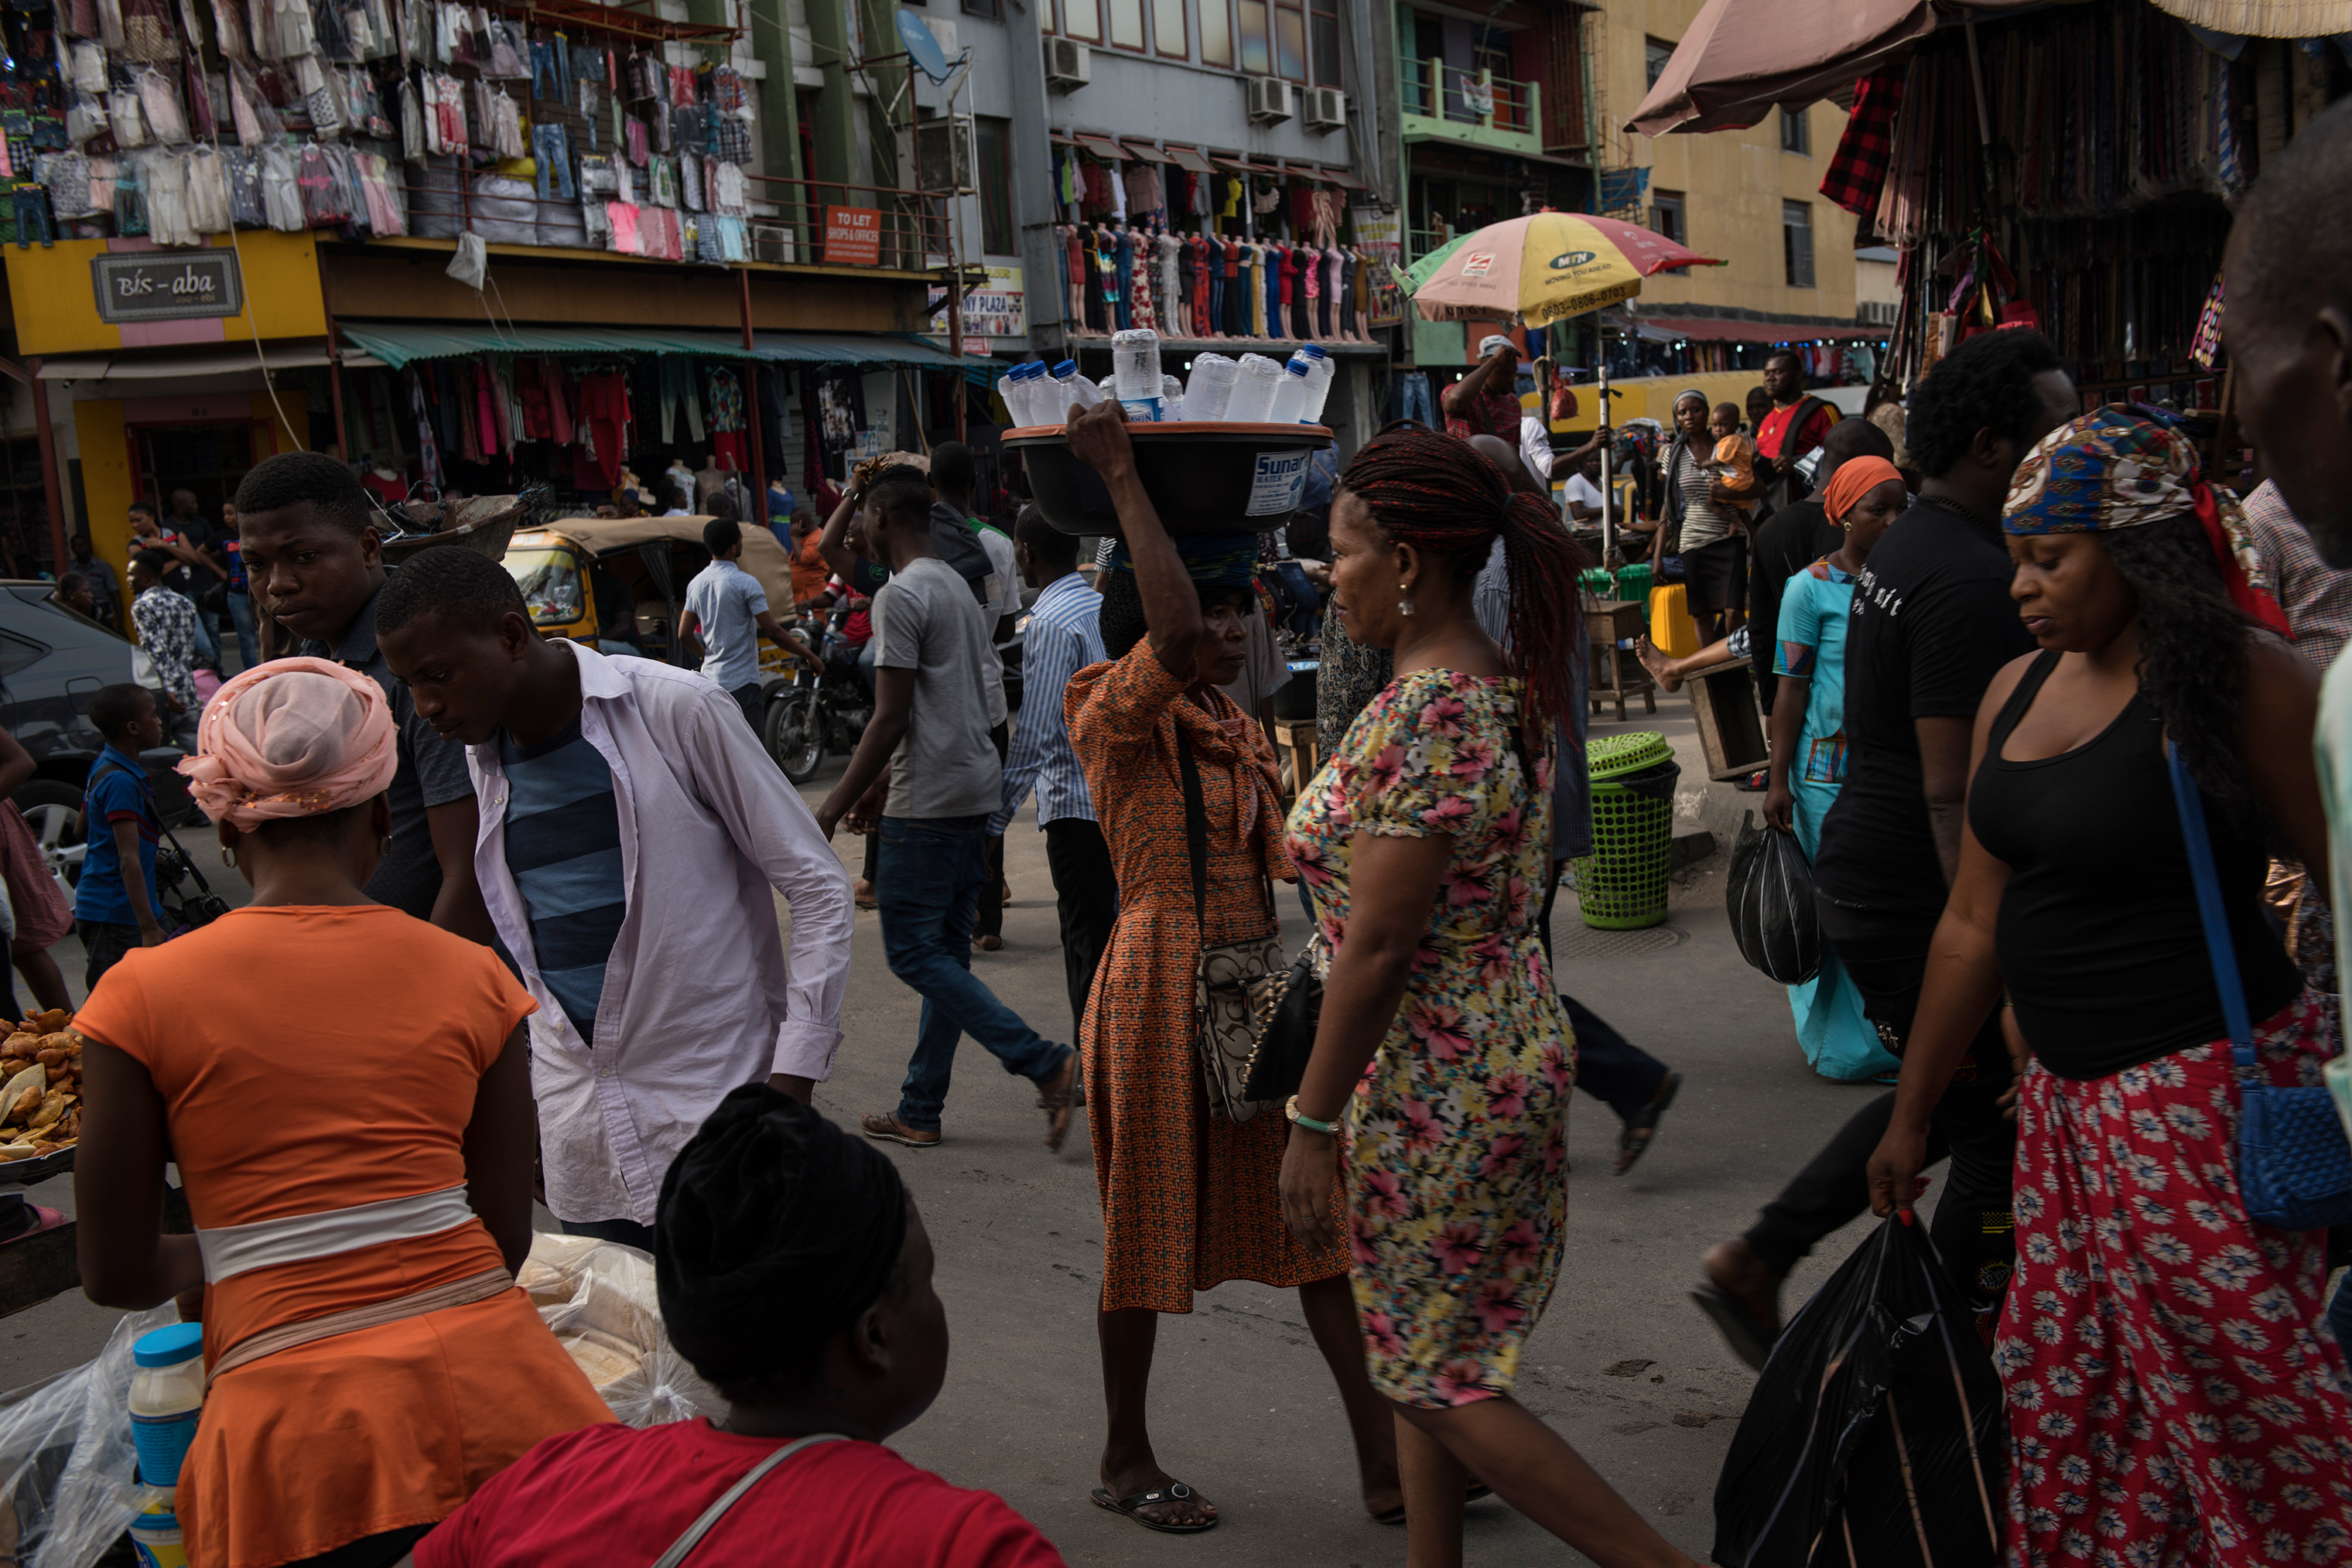 Nigerians walk through the market in Lagos, Nigeria, March 20, 2018 (Lynsey Addario for TIME)